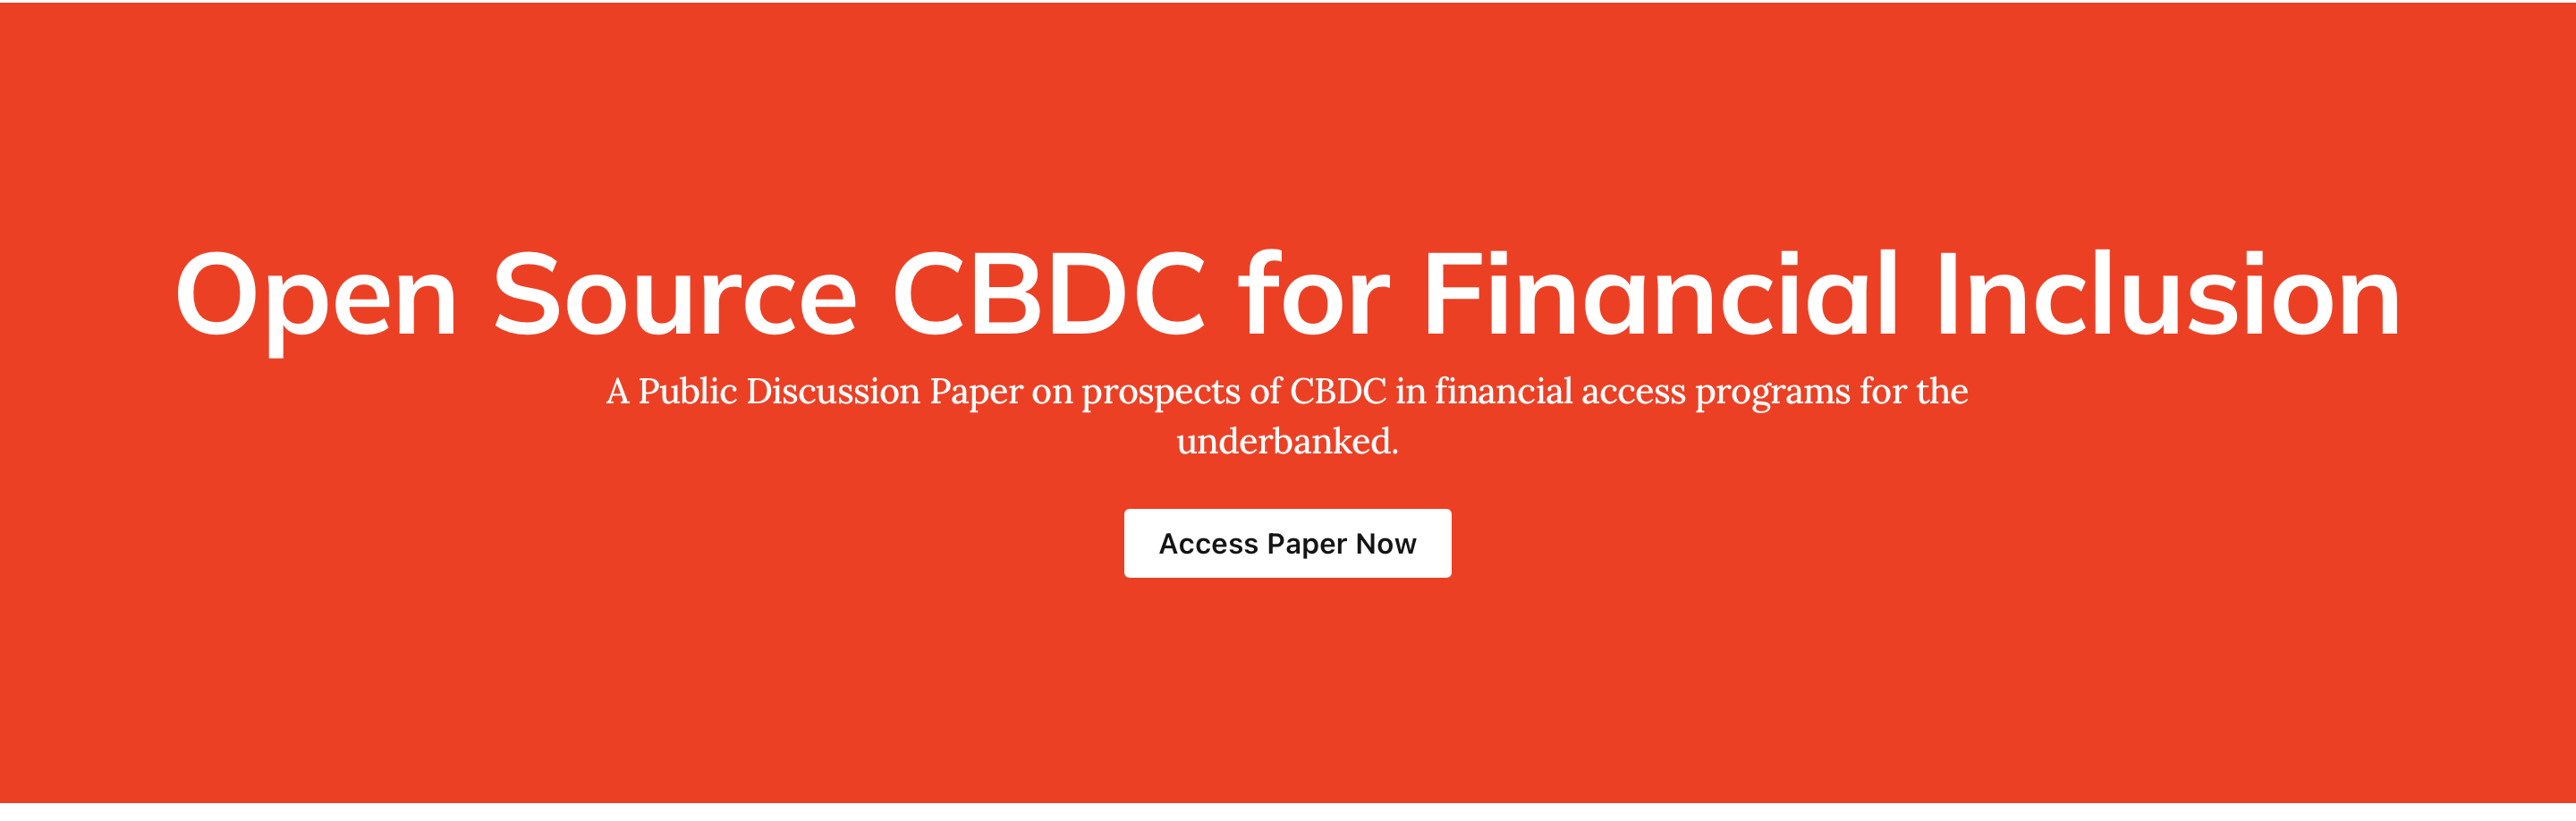 Open Source CBDC Public Discussion Paper